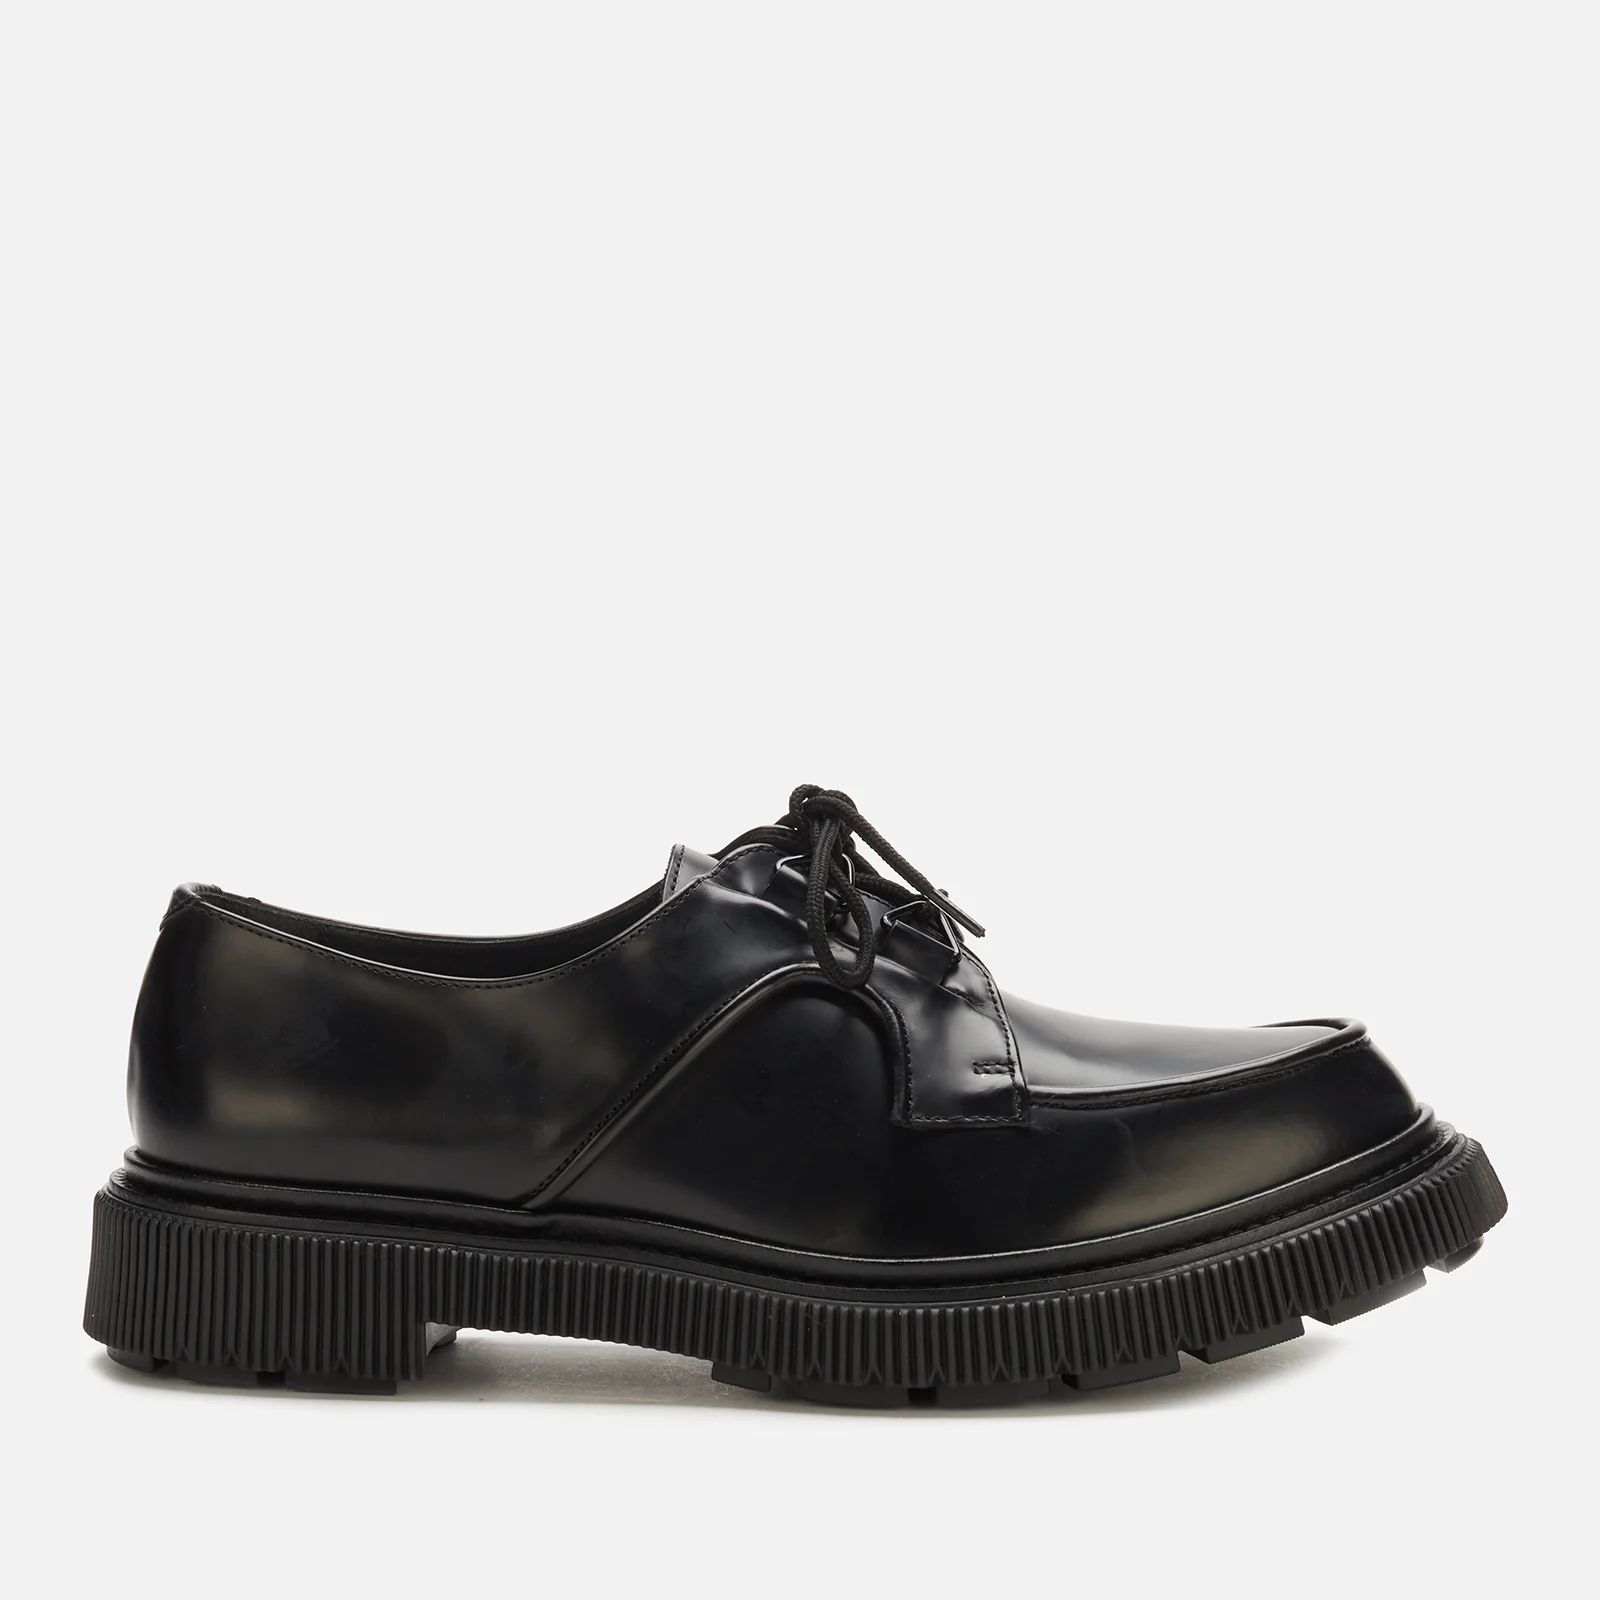 Adieu Men's Type 175 Leather Derby Shoes - Black Image 1